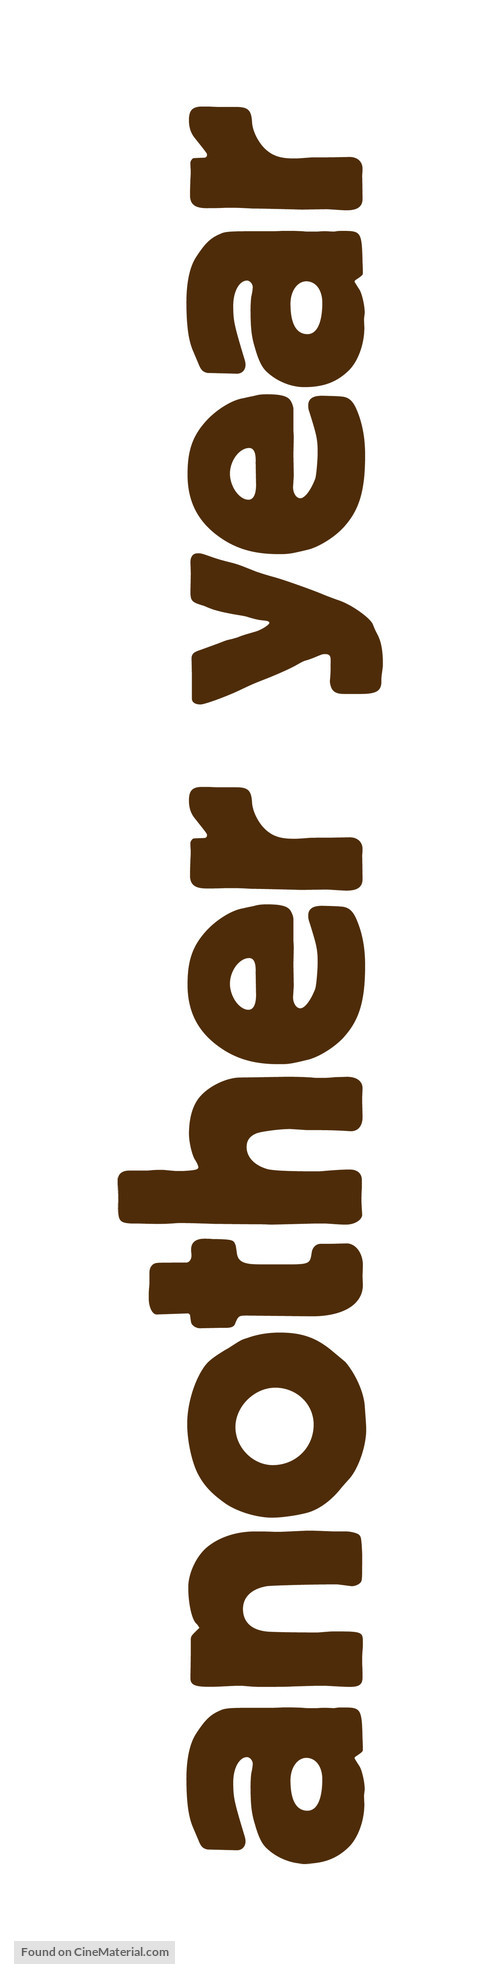 Another Year - Danish Logo